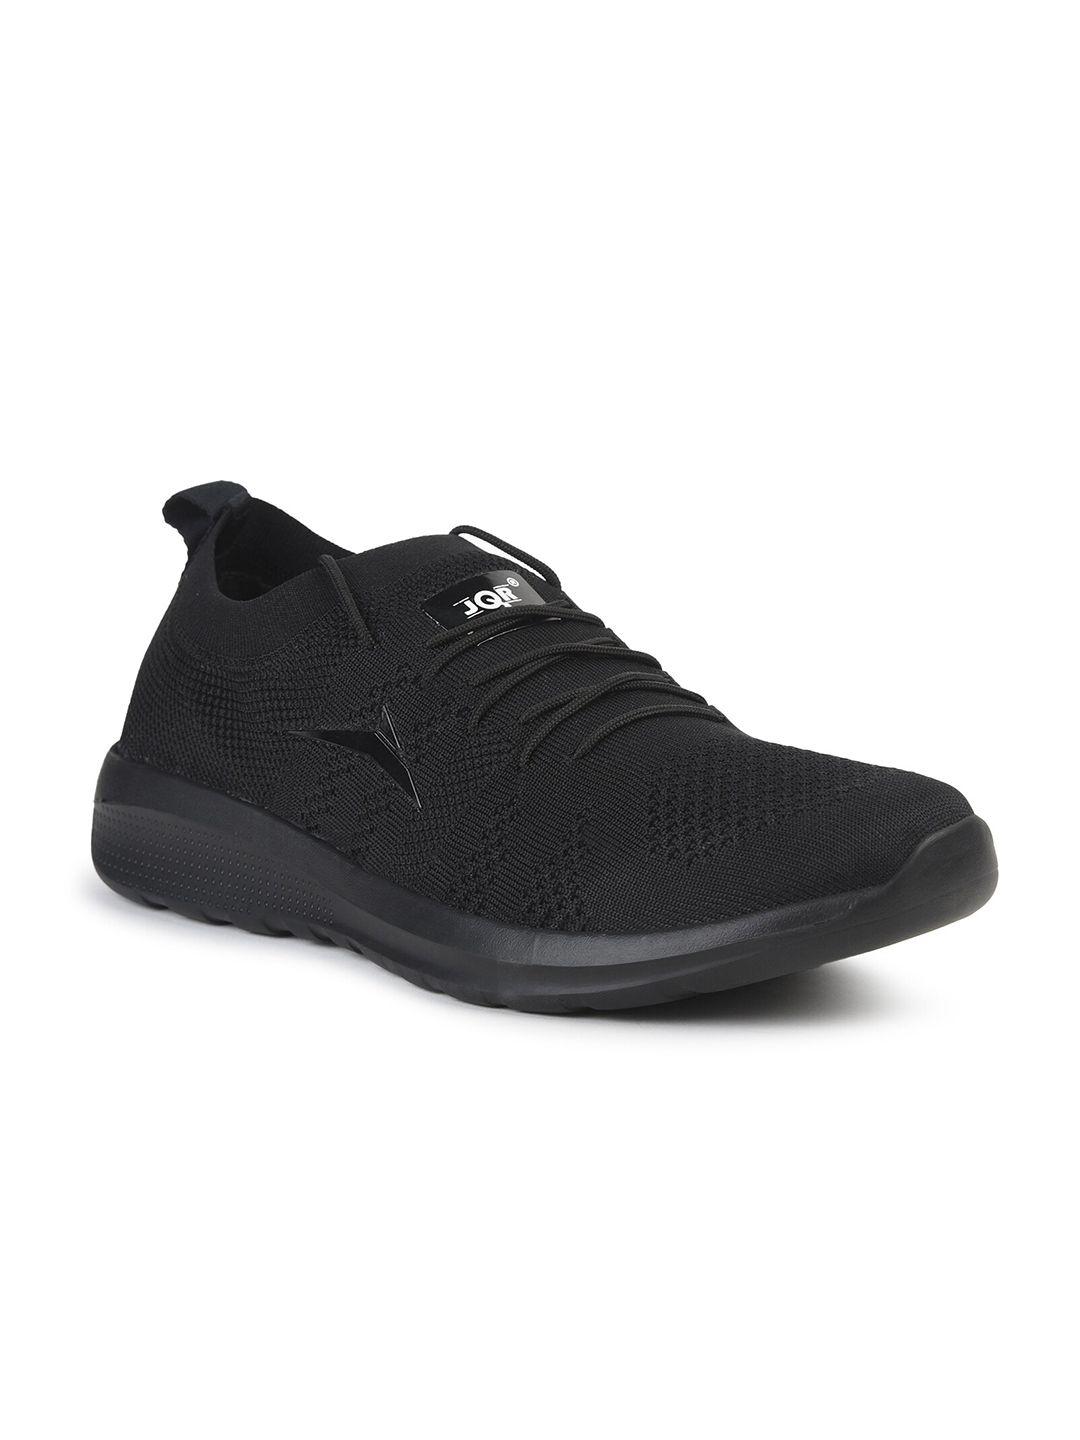 jqr-men-black-lace-up-mesh-running-sports-shoes